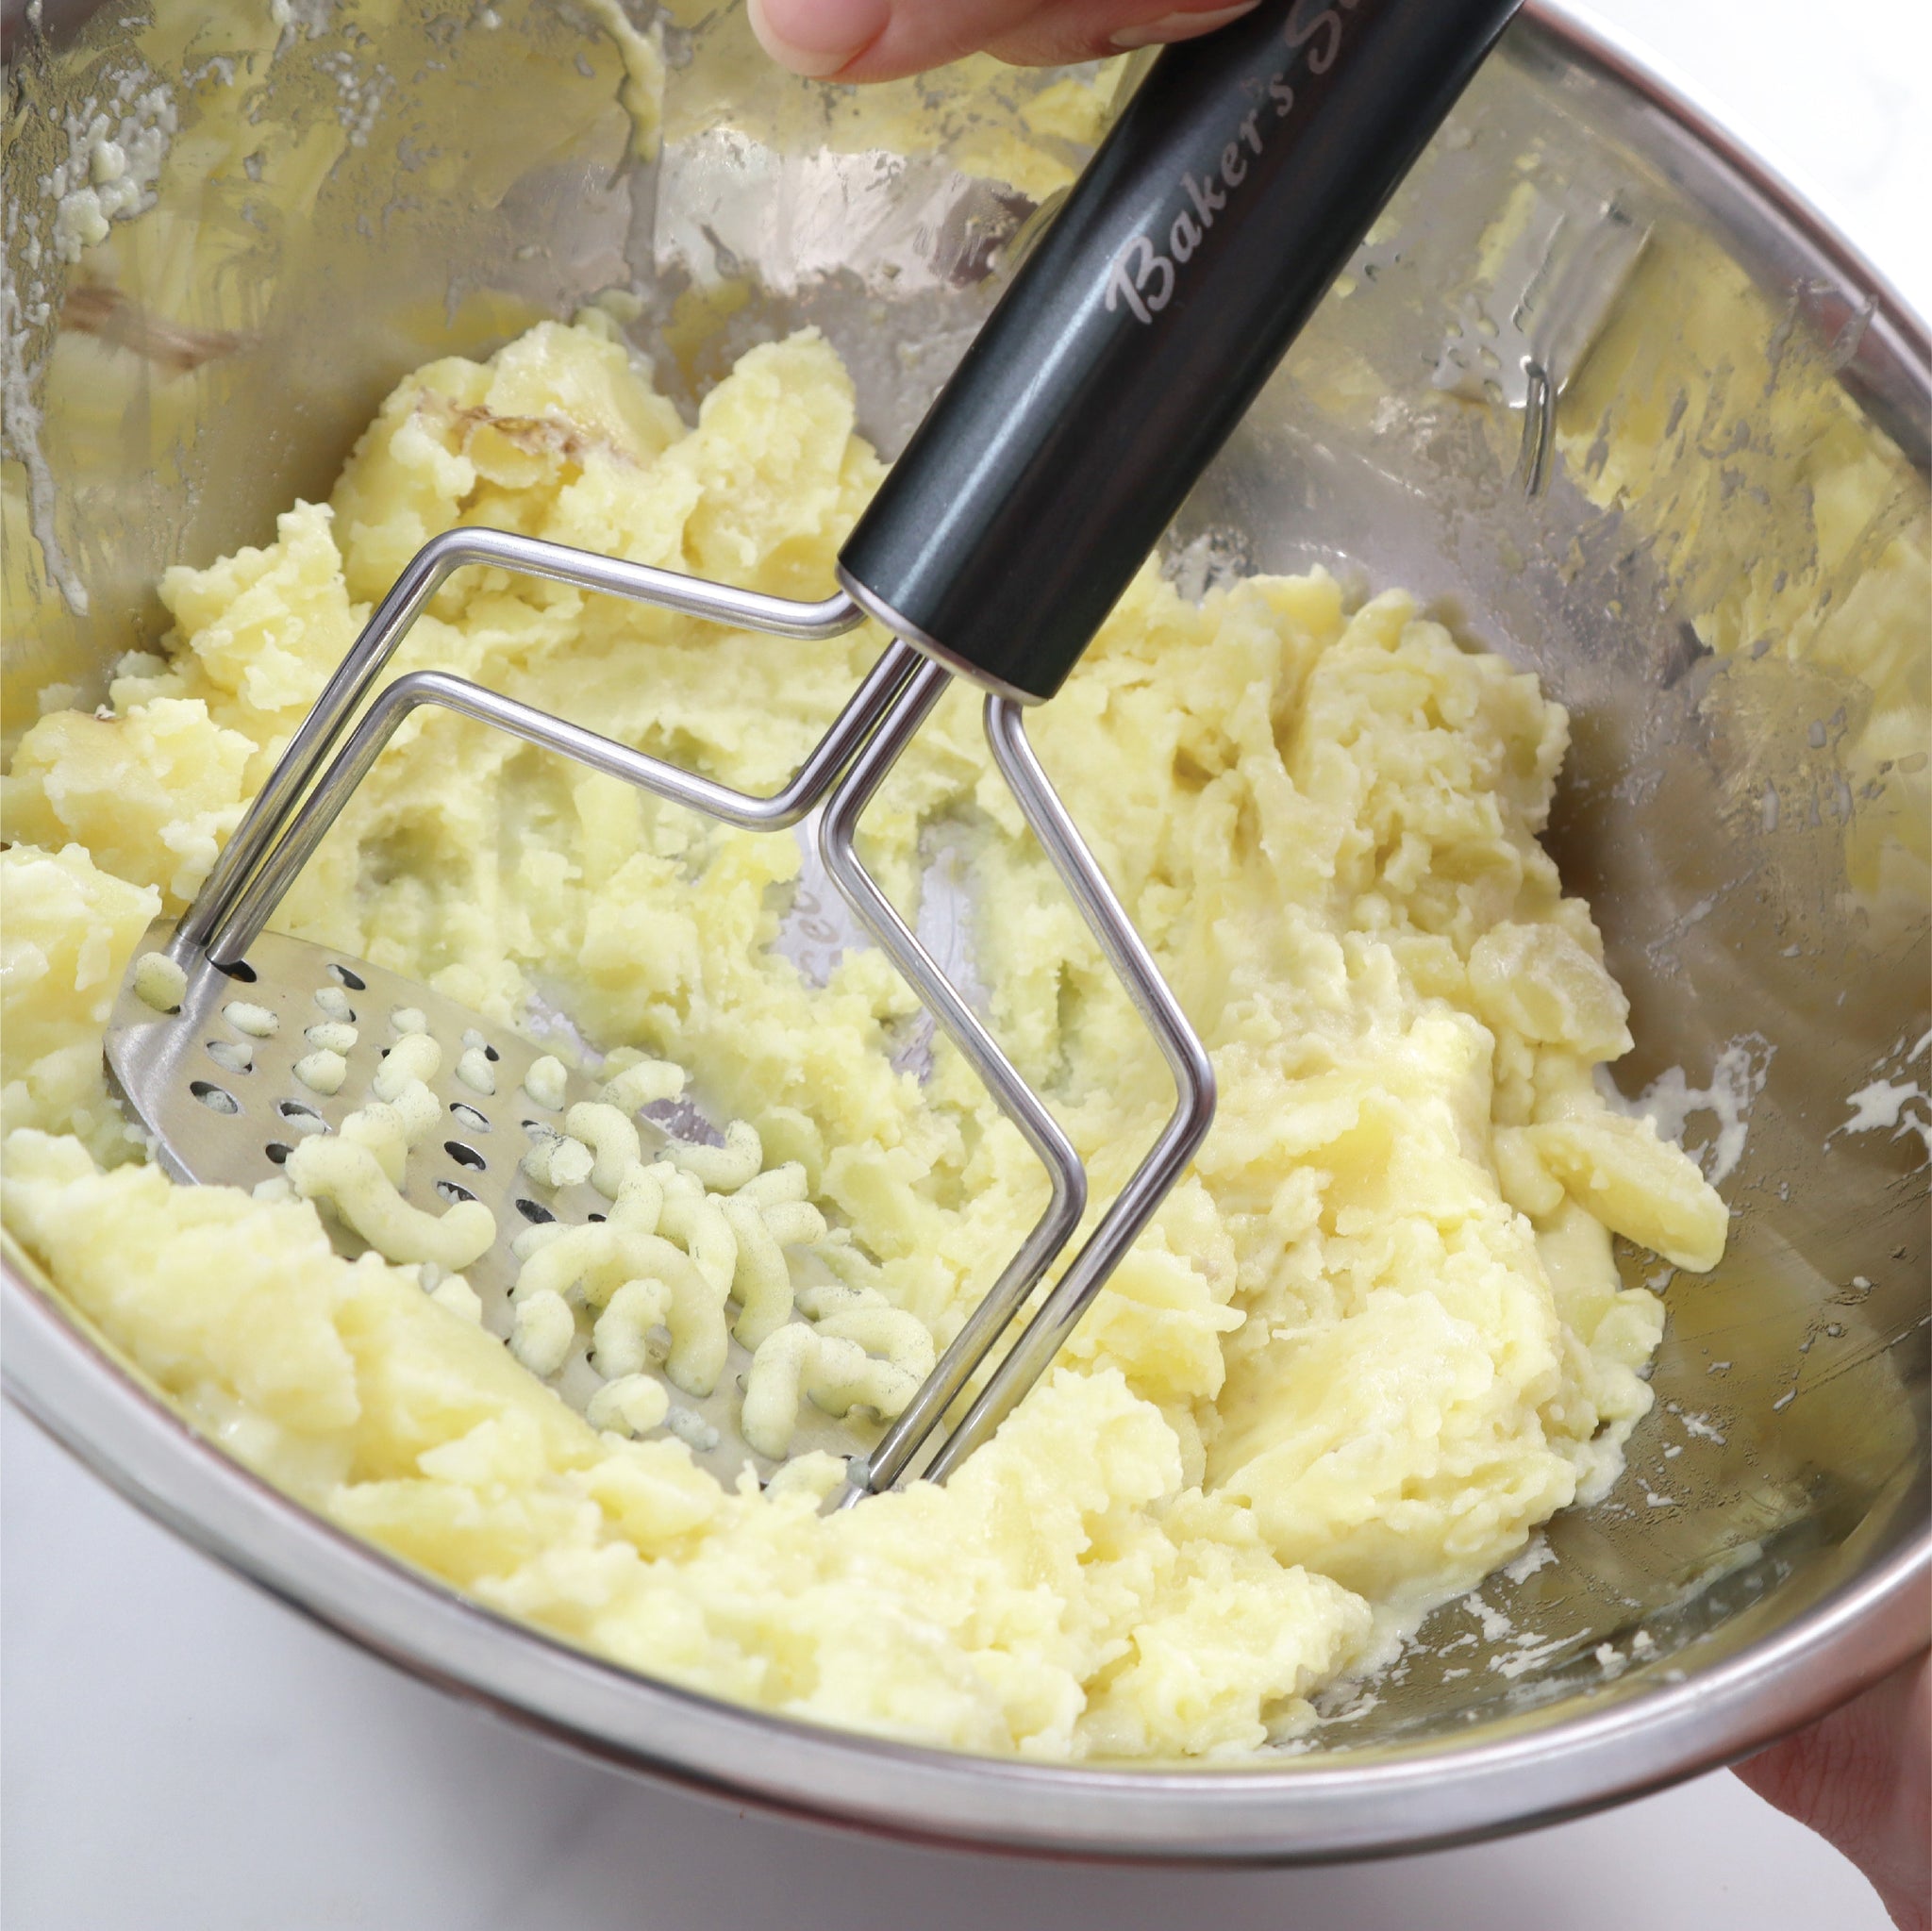 Stainless Steel Dual Press Potato Masher  Cookware Accessories - Baker's Secret